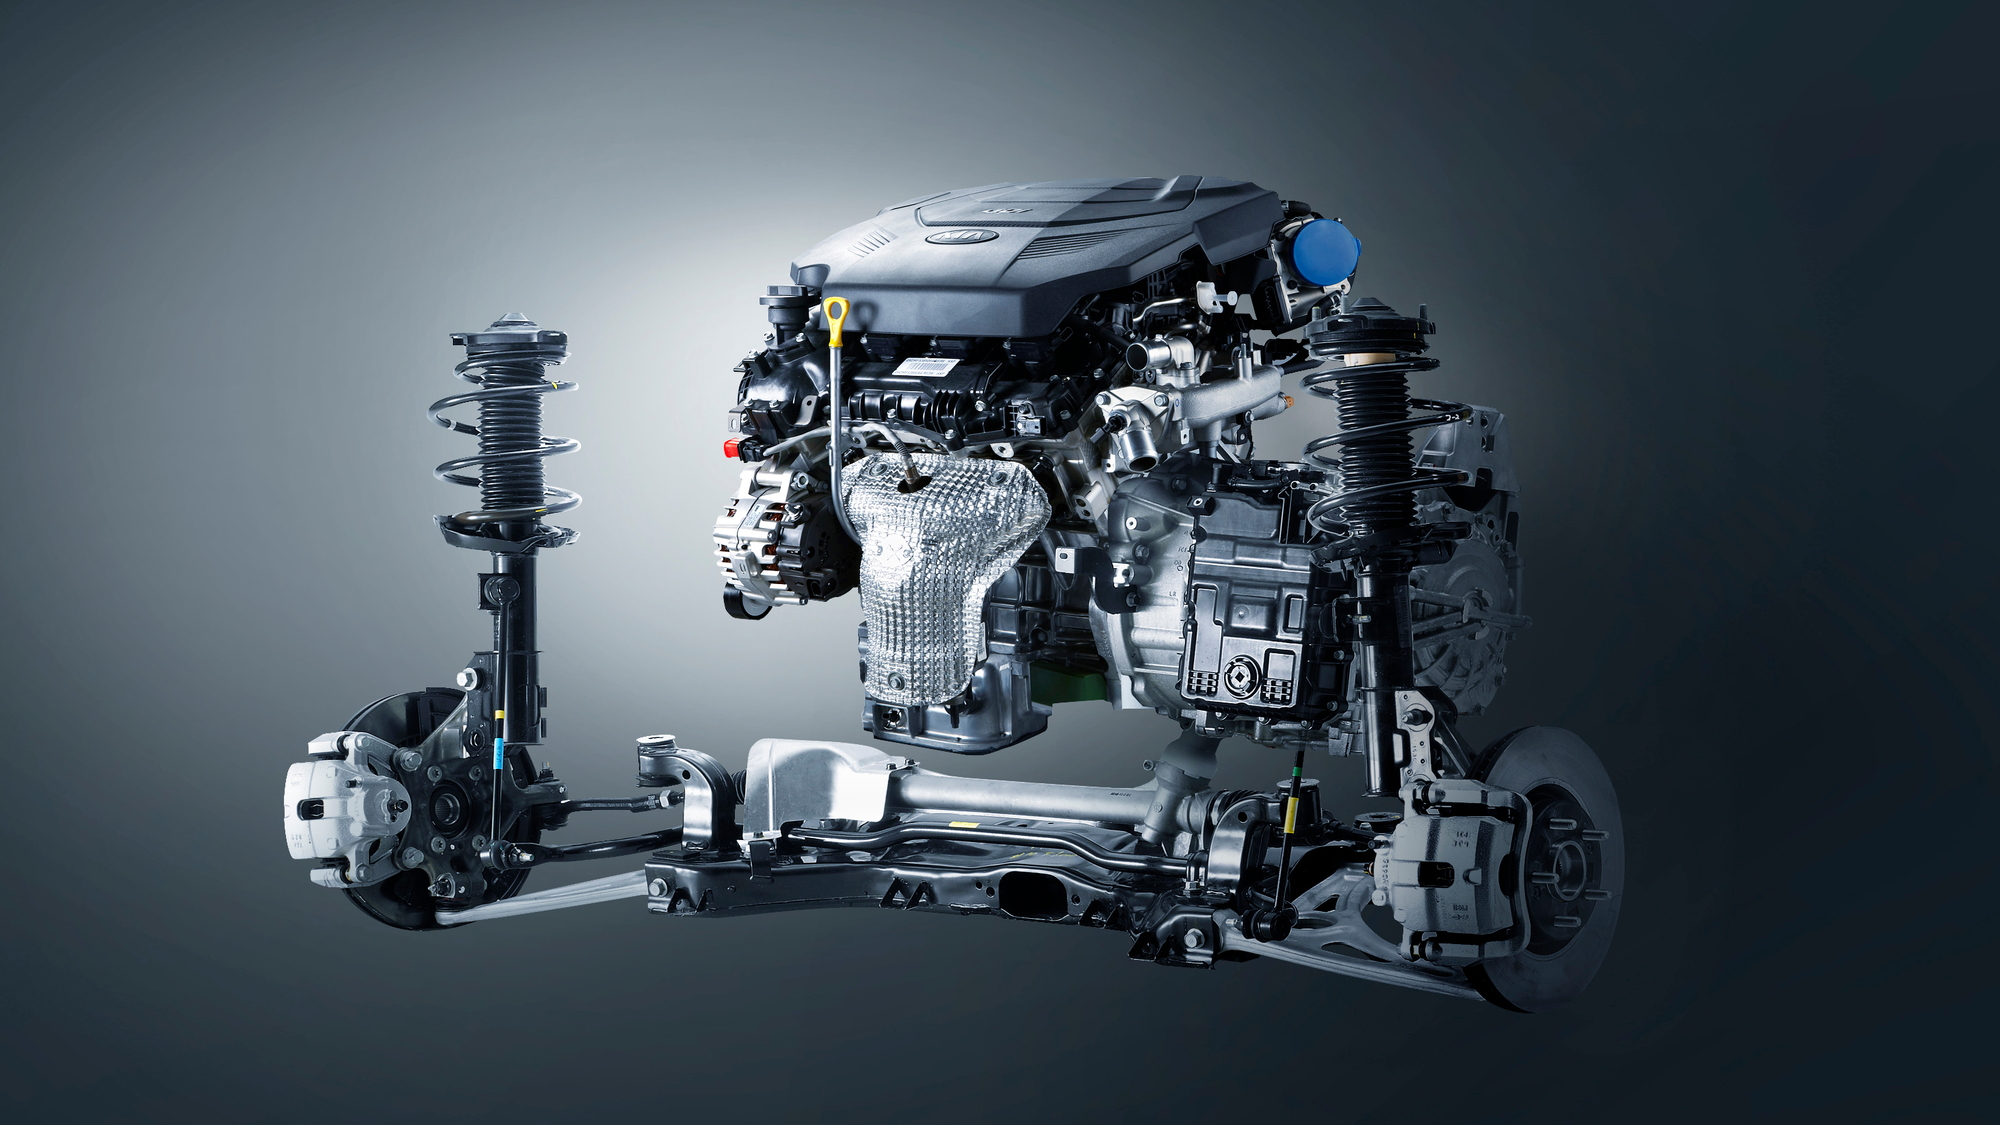 Kia's new 8-speed automatic transmission